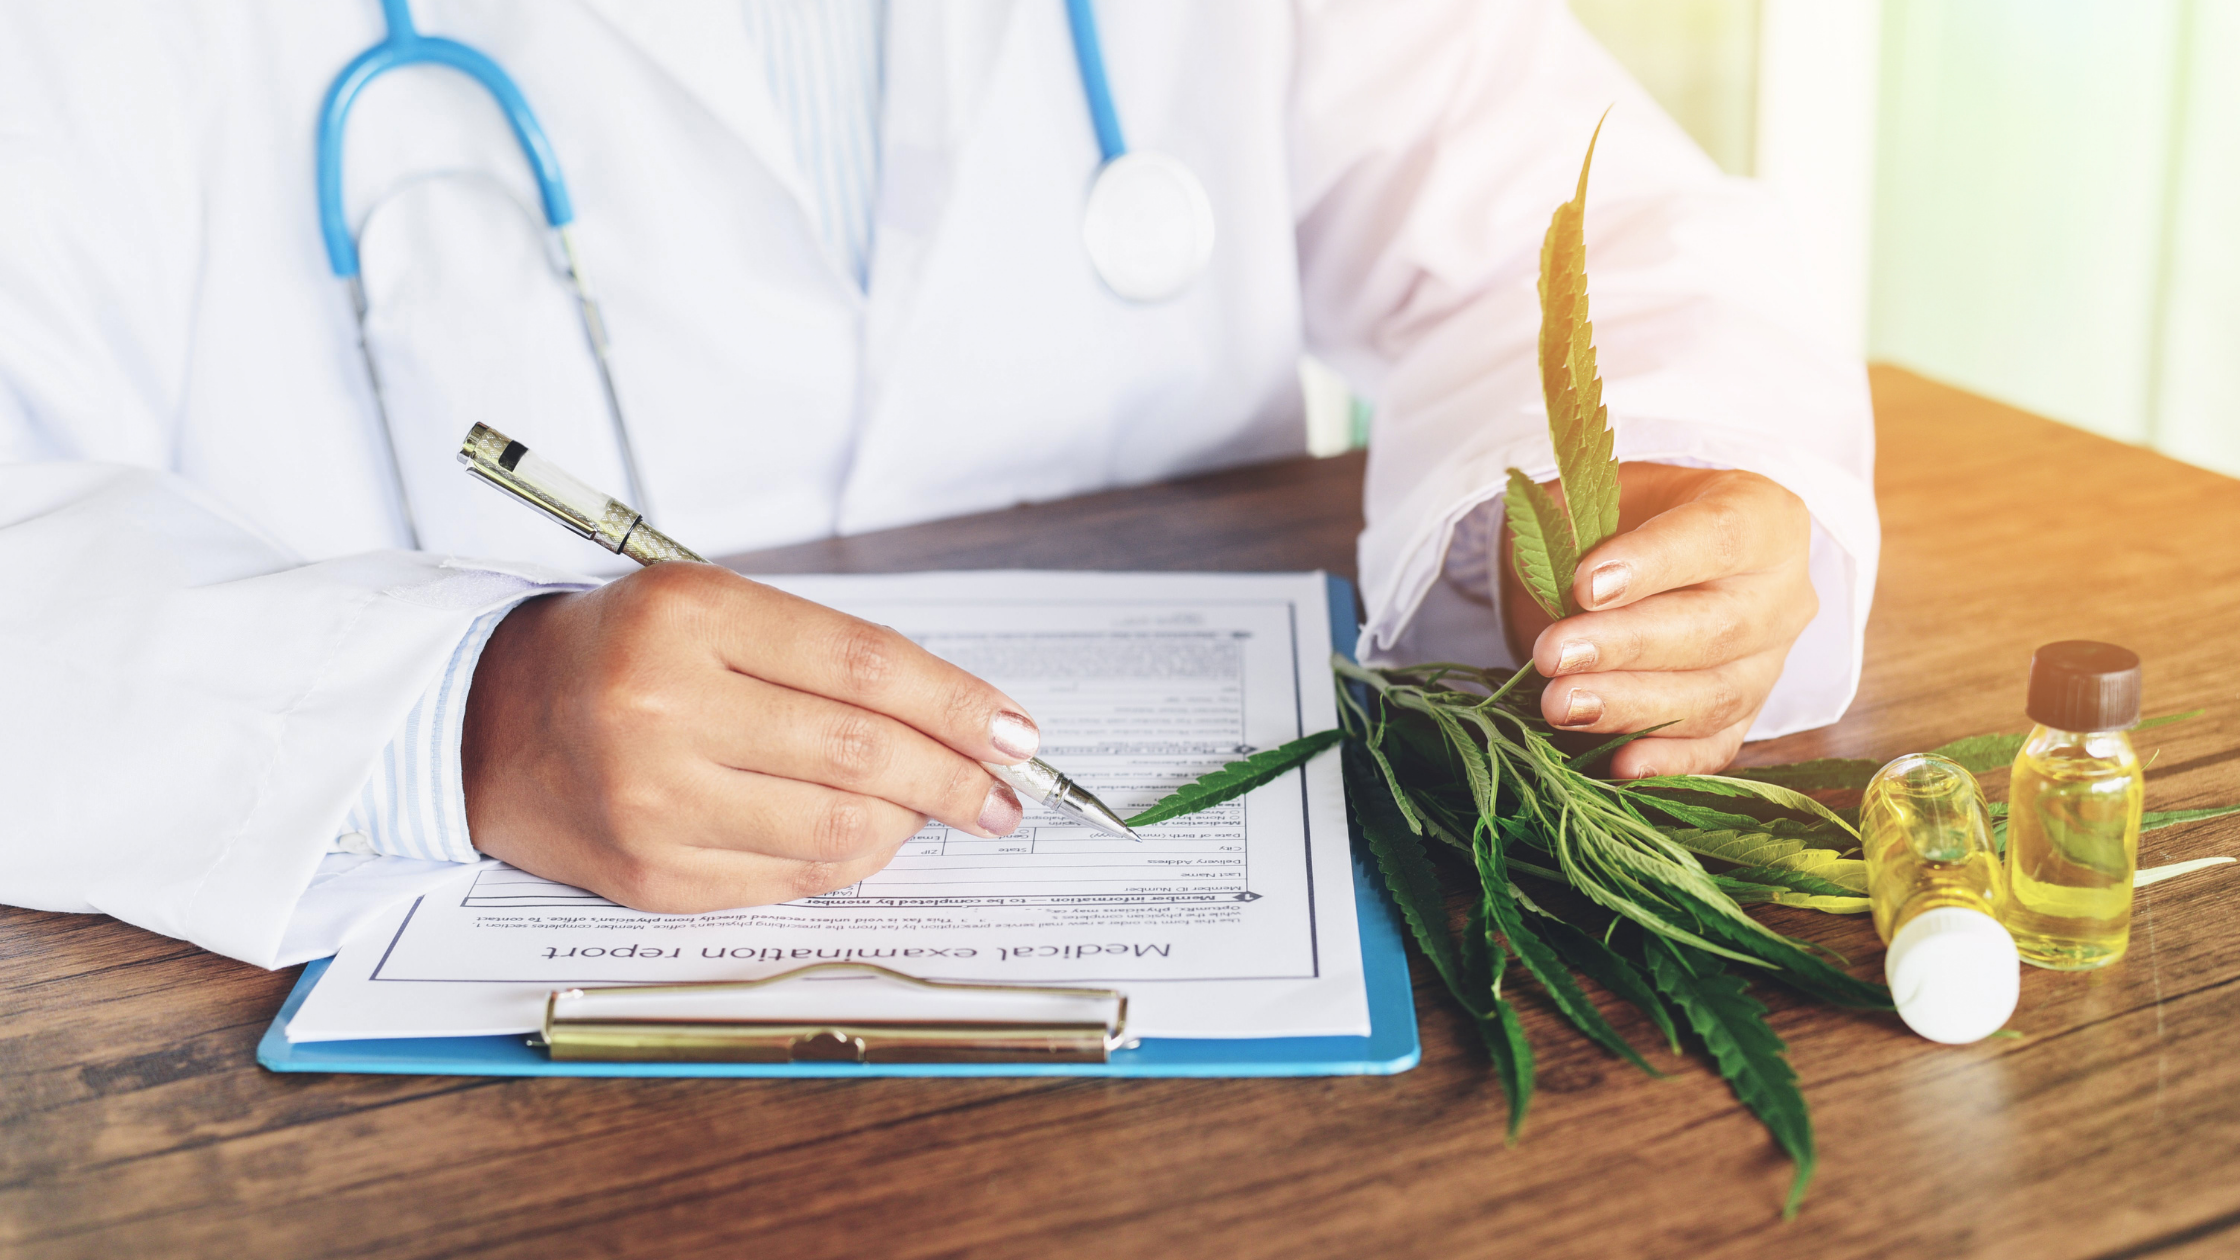 Let's debunk the myths about medical marijuana!